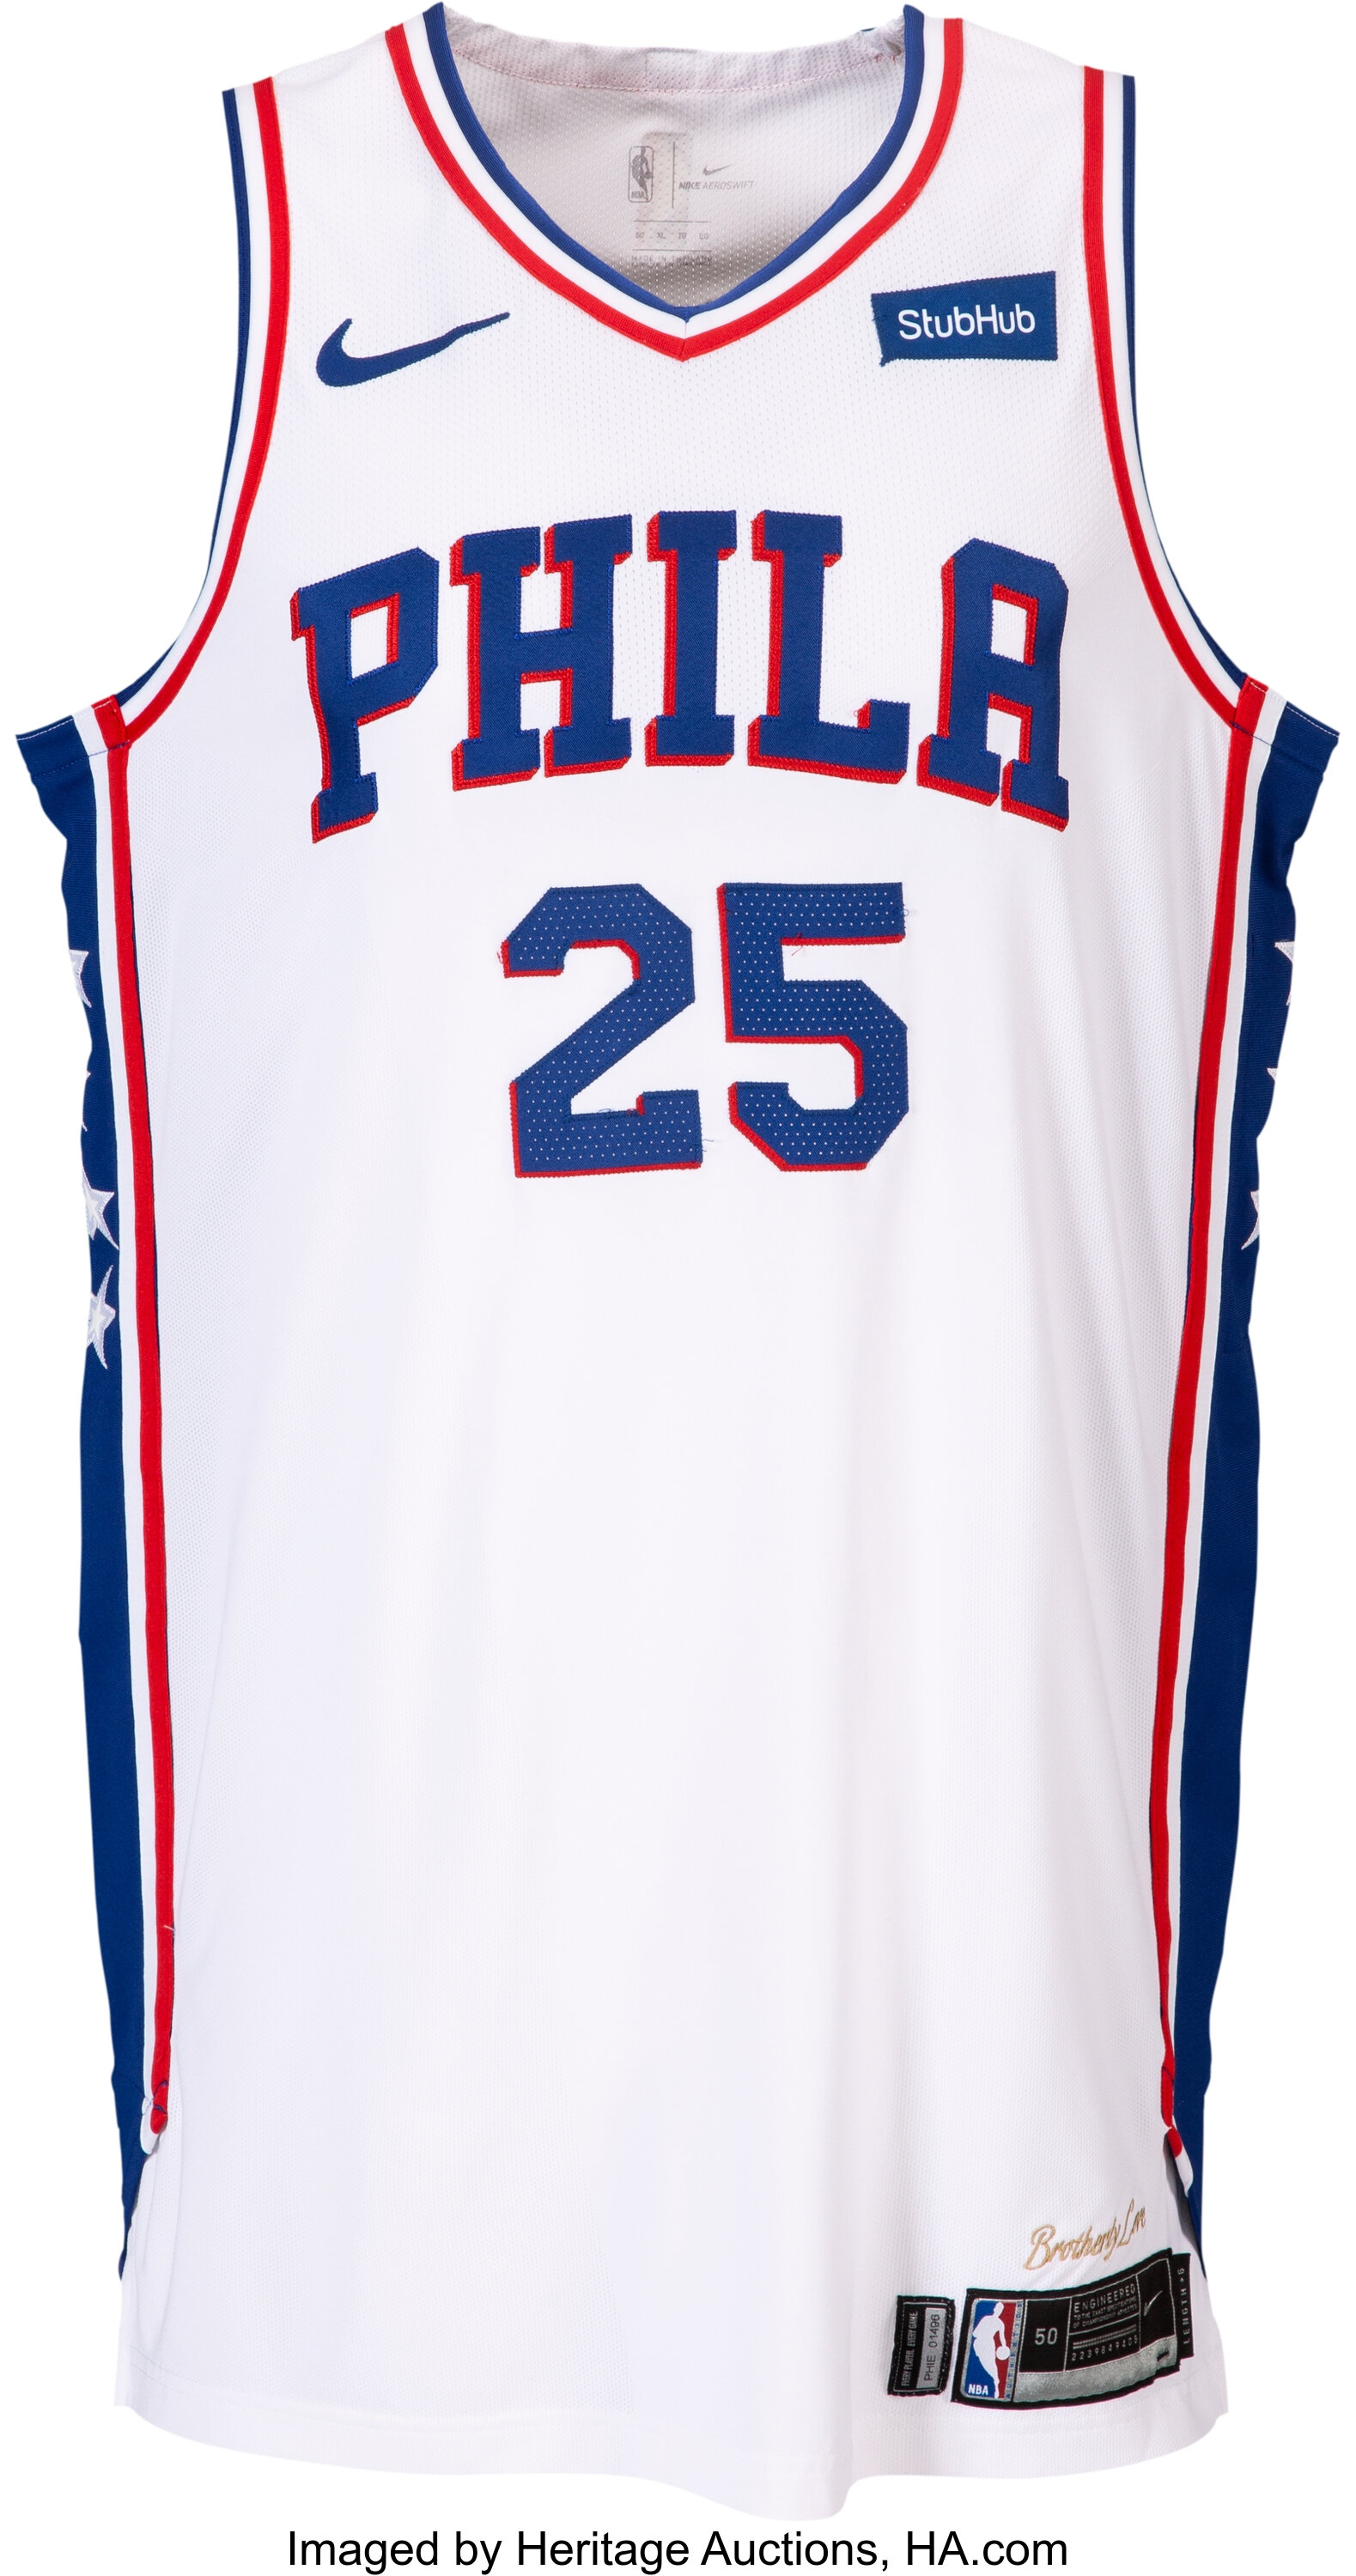 2018 Philadelphia 76ers City Uniform (with playoff court) XBOX